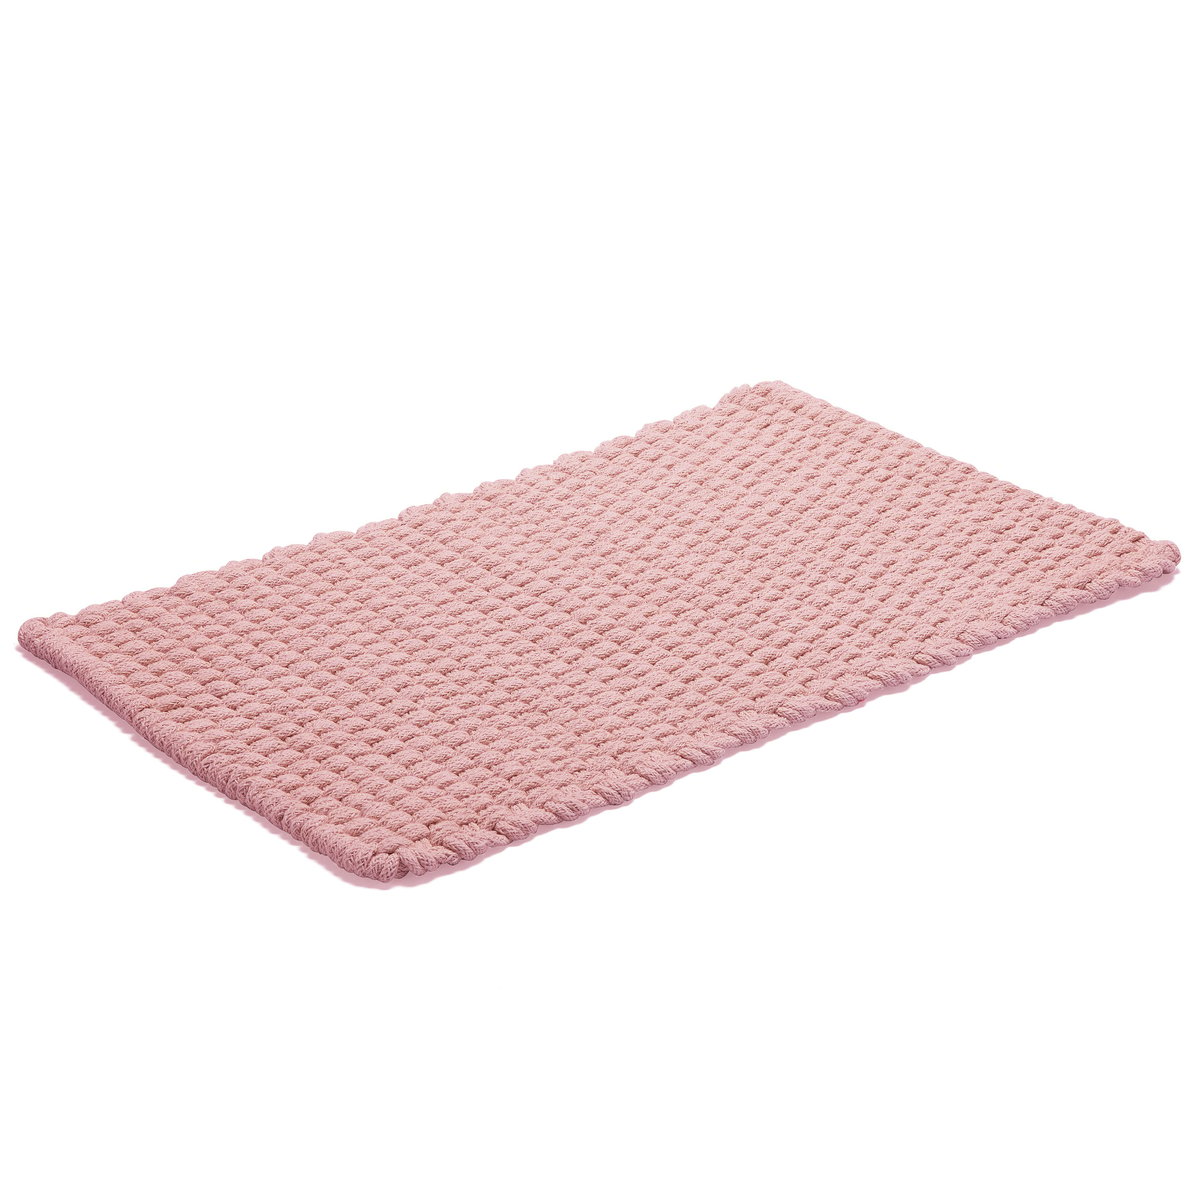 ETOL Design Rope matto 50 x 80 cm Dusty pink